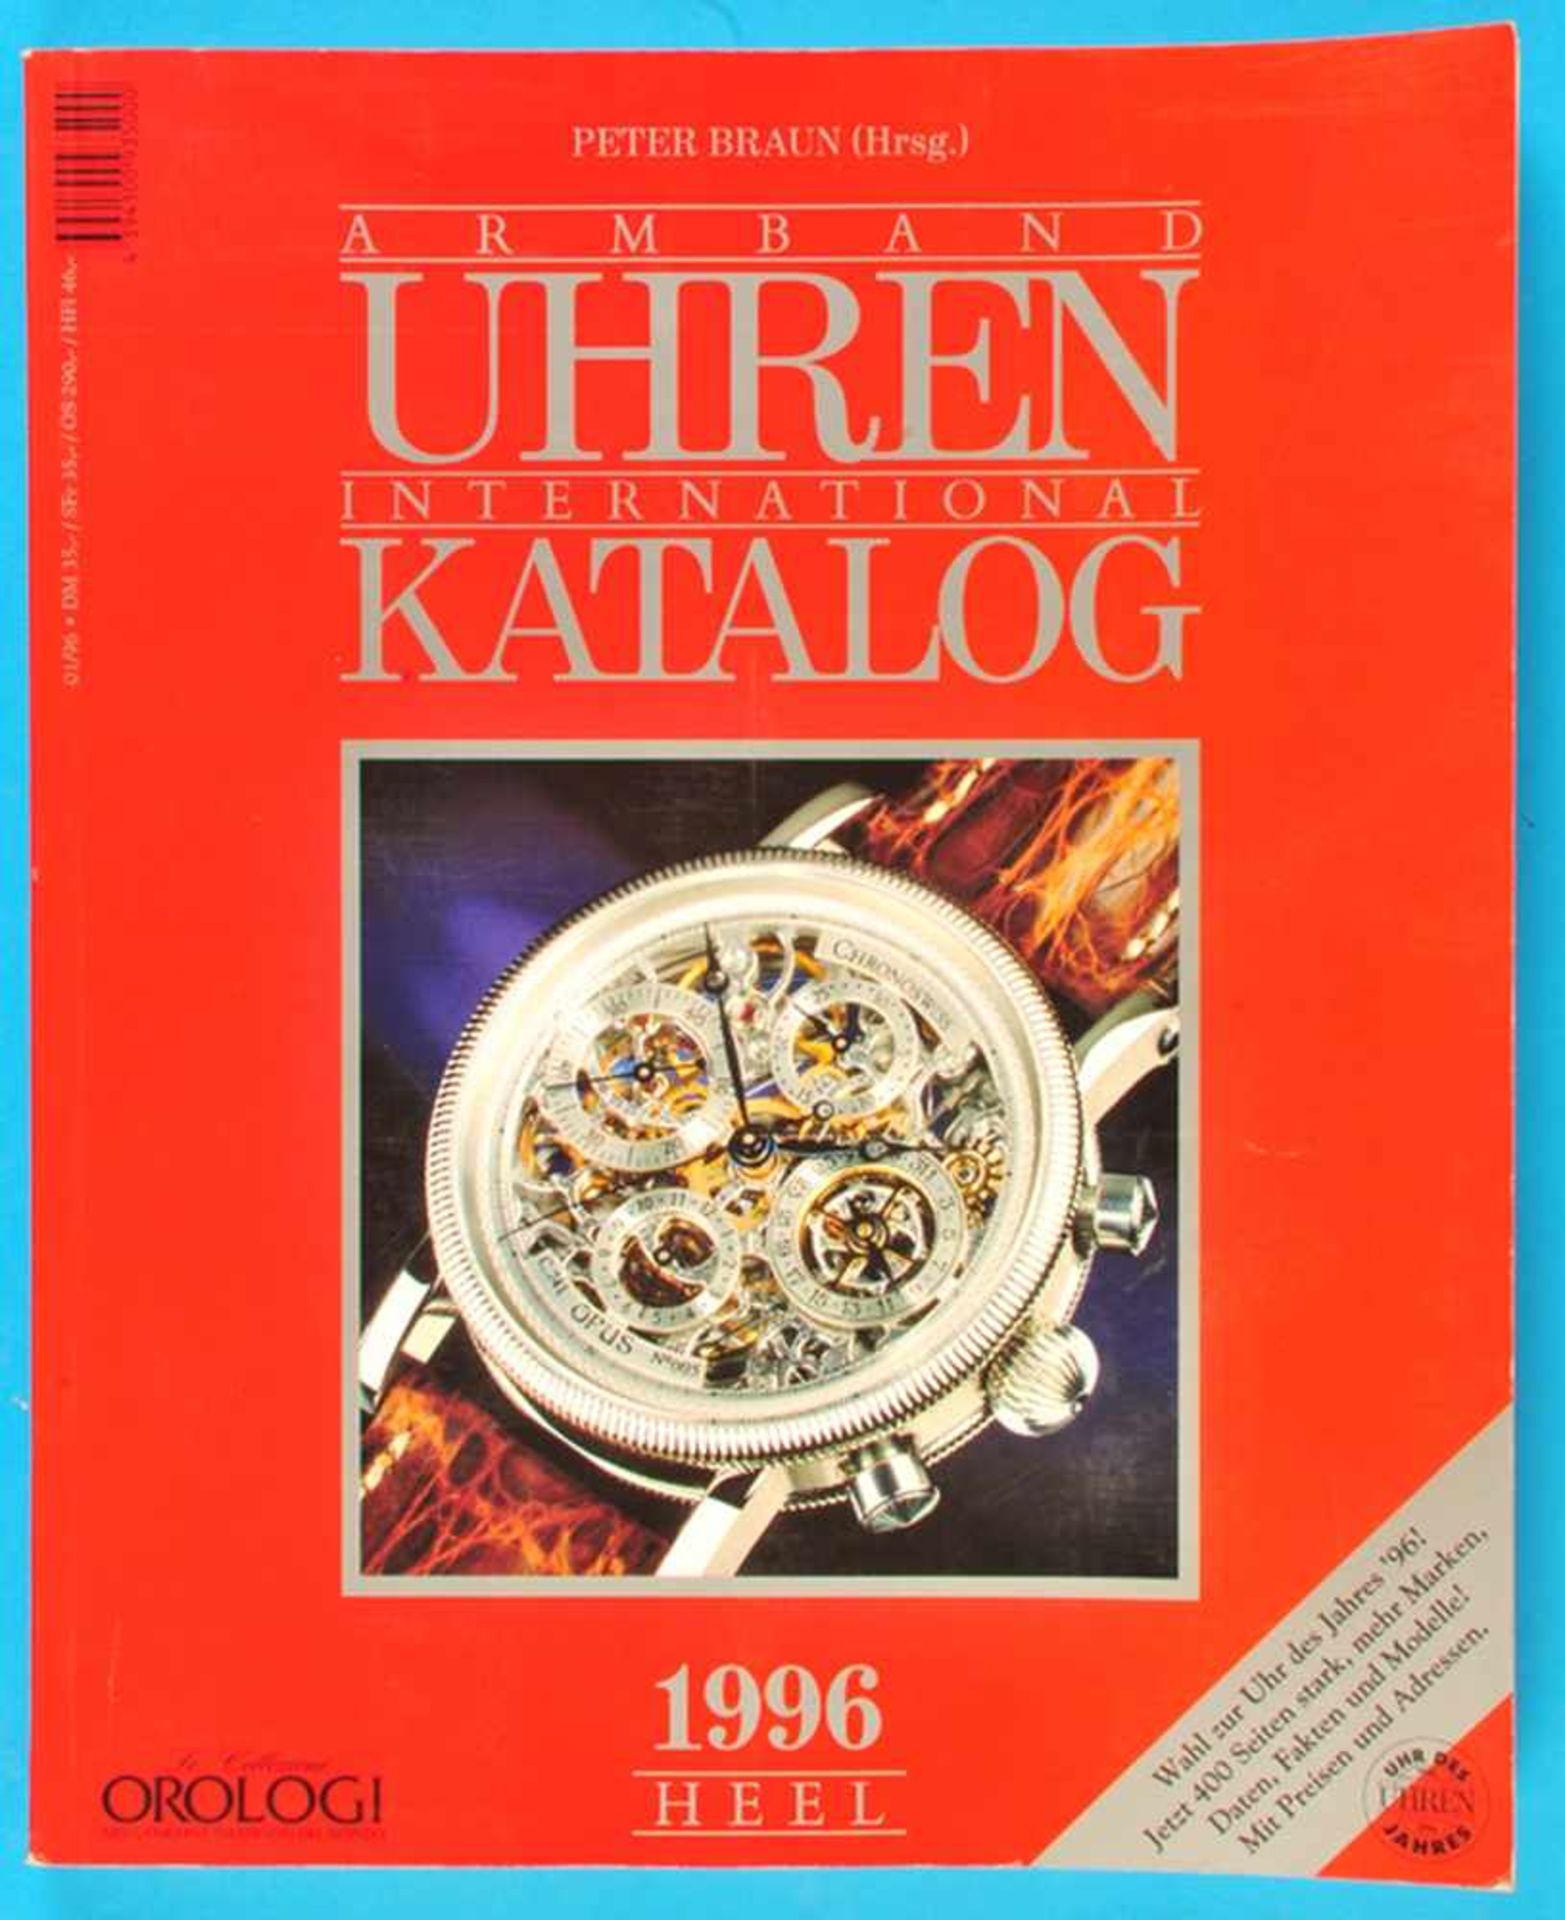 Heel, Armbanduhren-International-Katalog 1996, 400 Seiten, Großformat (5753)Heel, Armbanduhren-